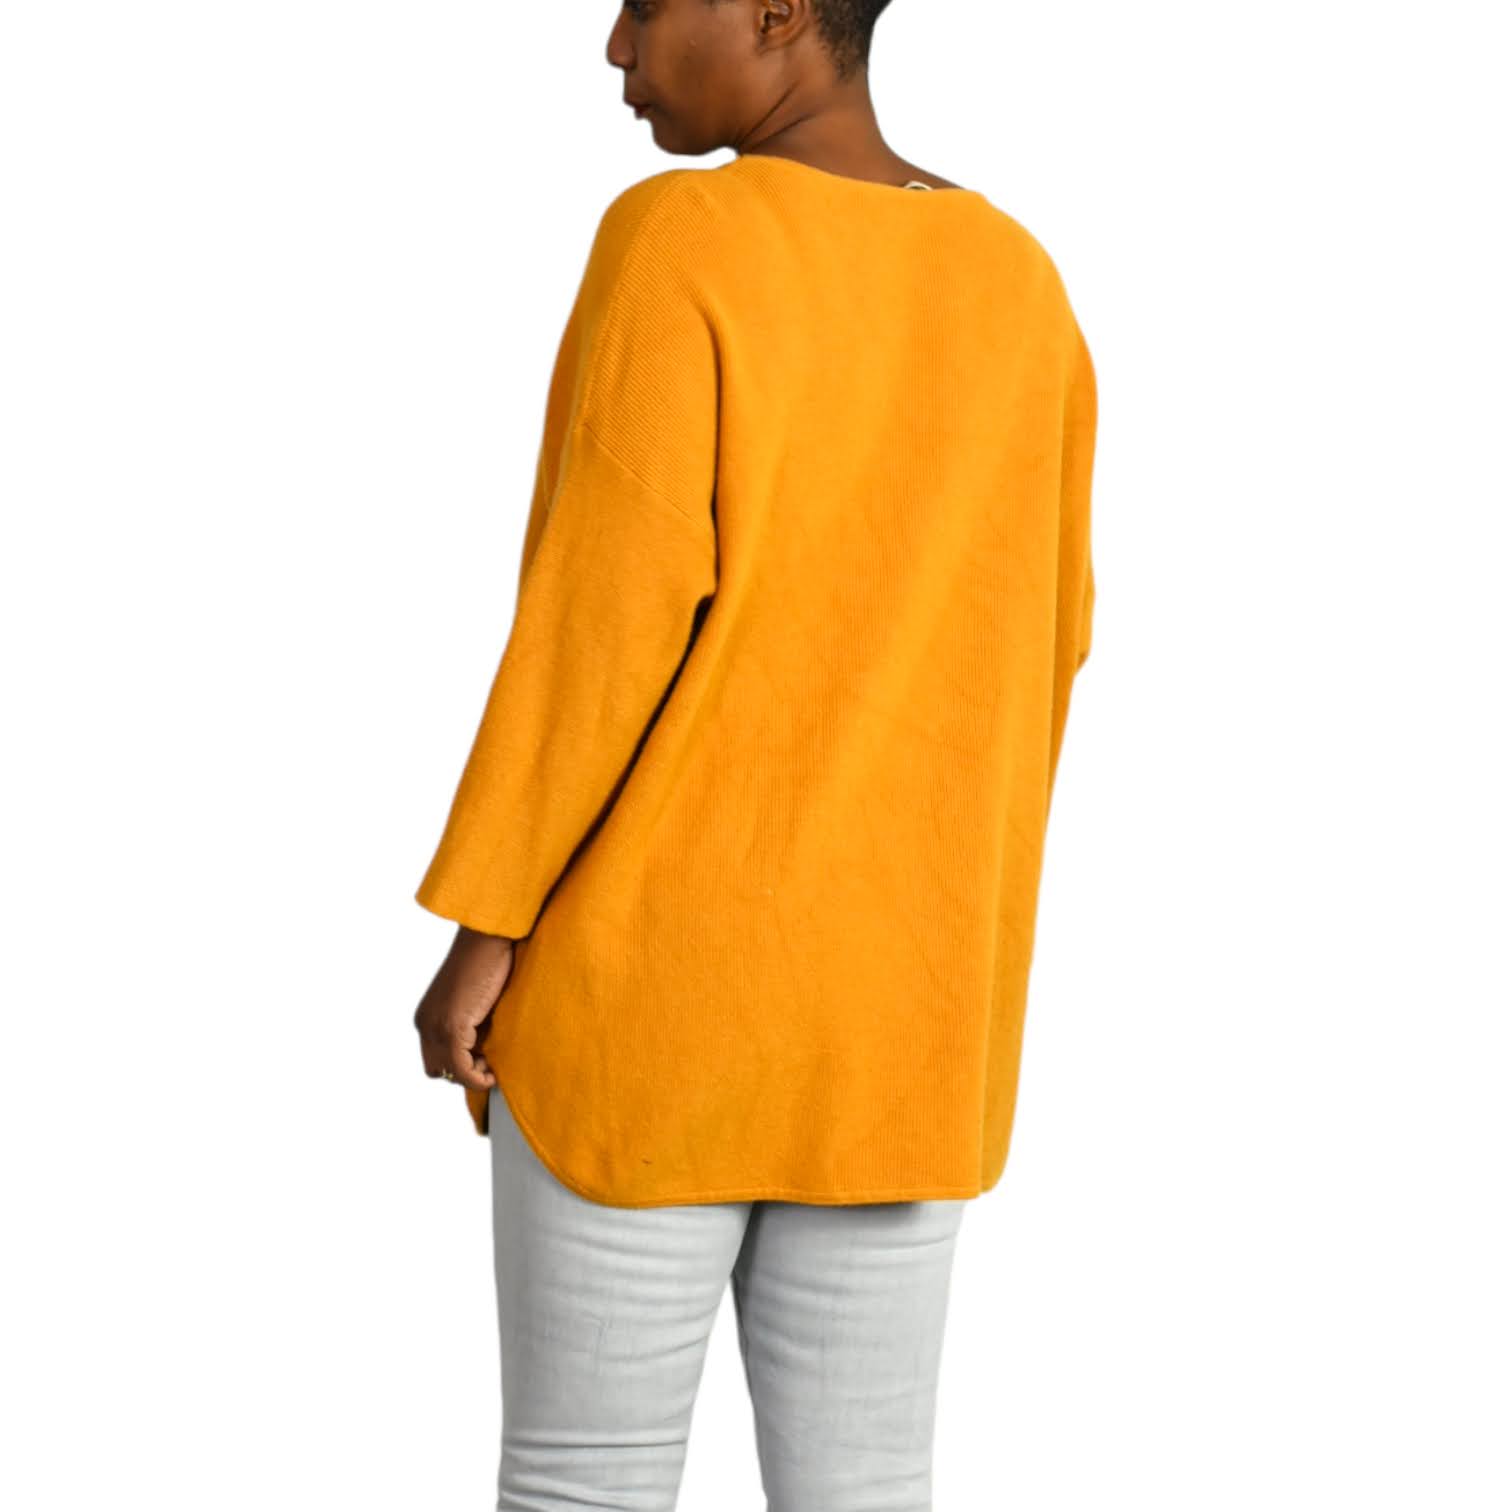 Soft Surrounding Celia Sweater Plus Size 2X